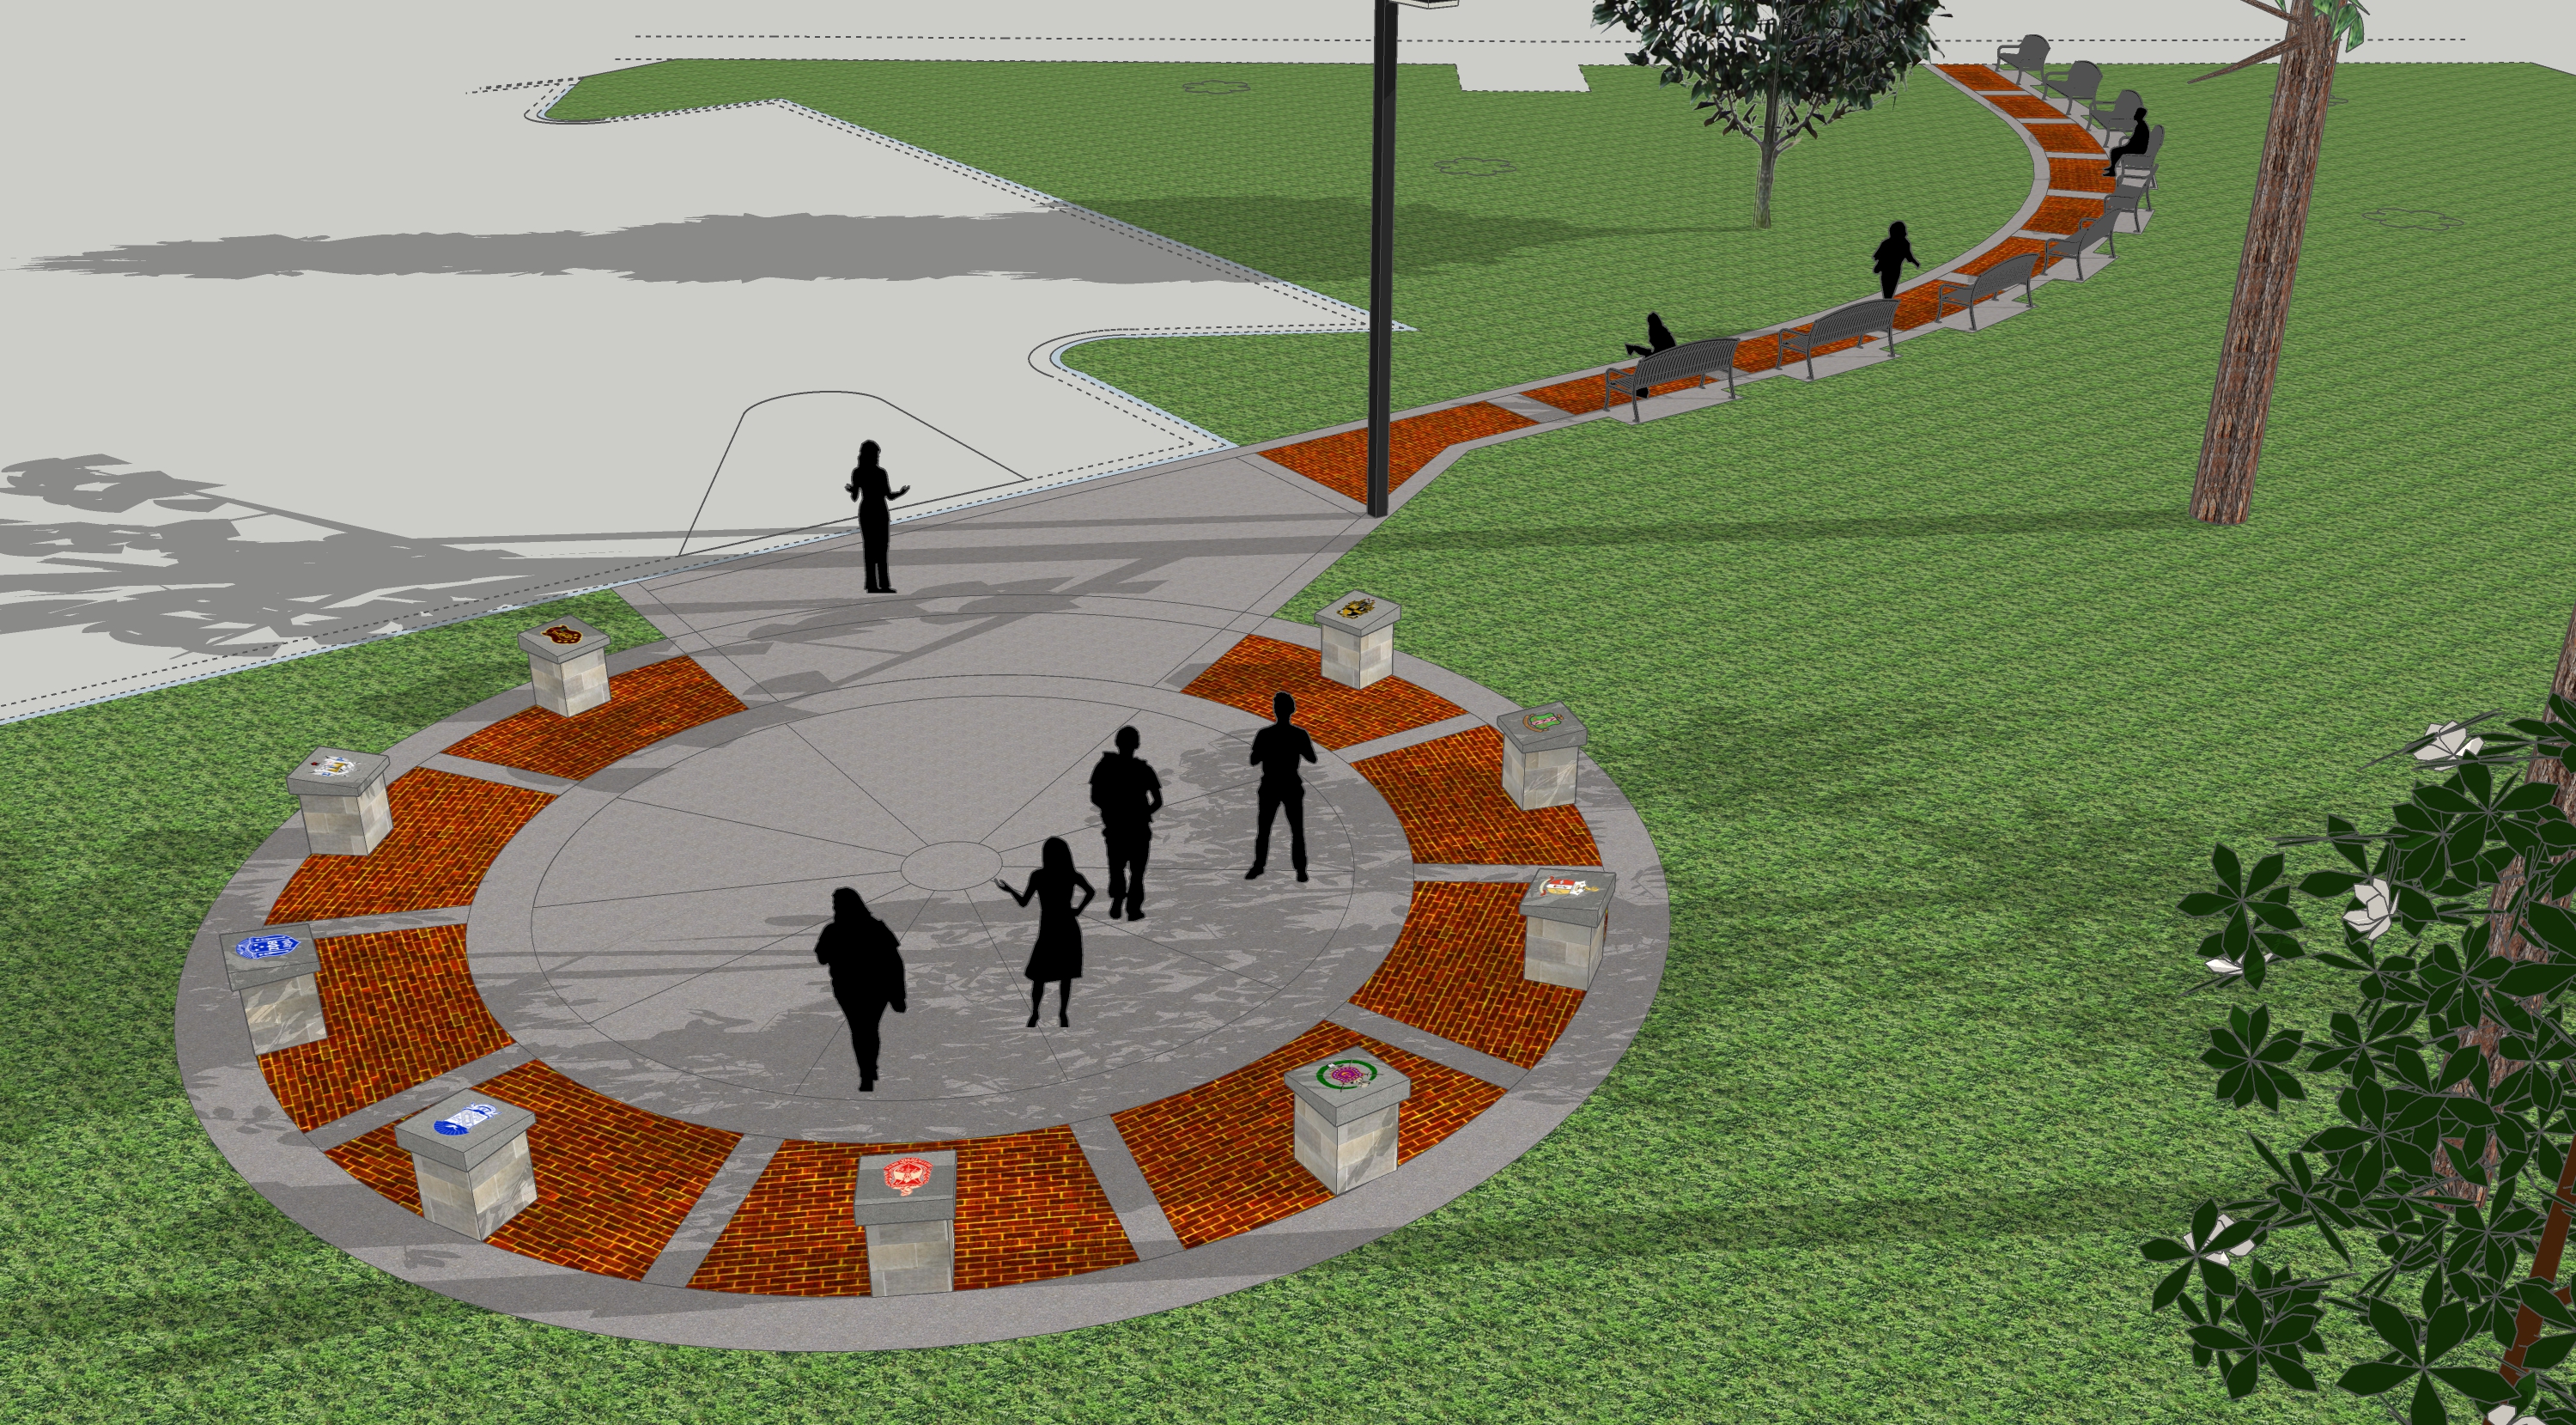 nphc-plaza-rendering.jpg